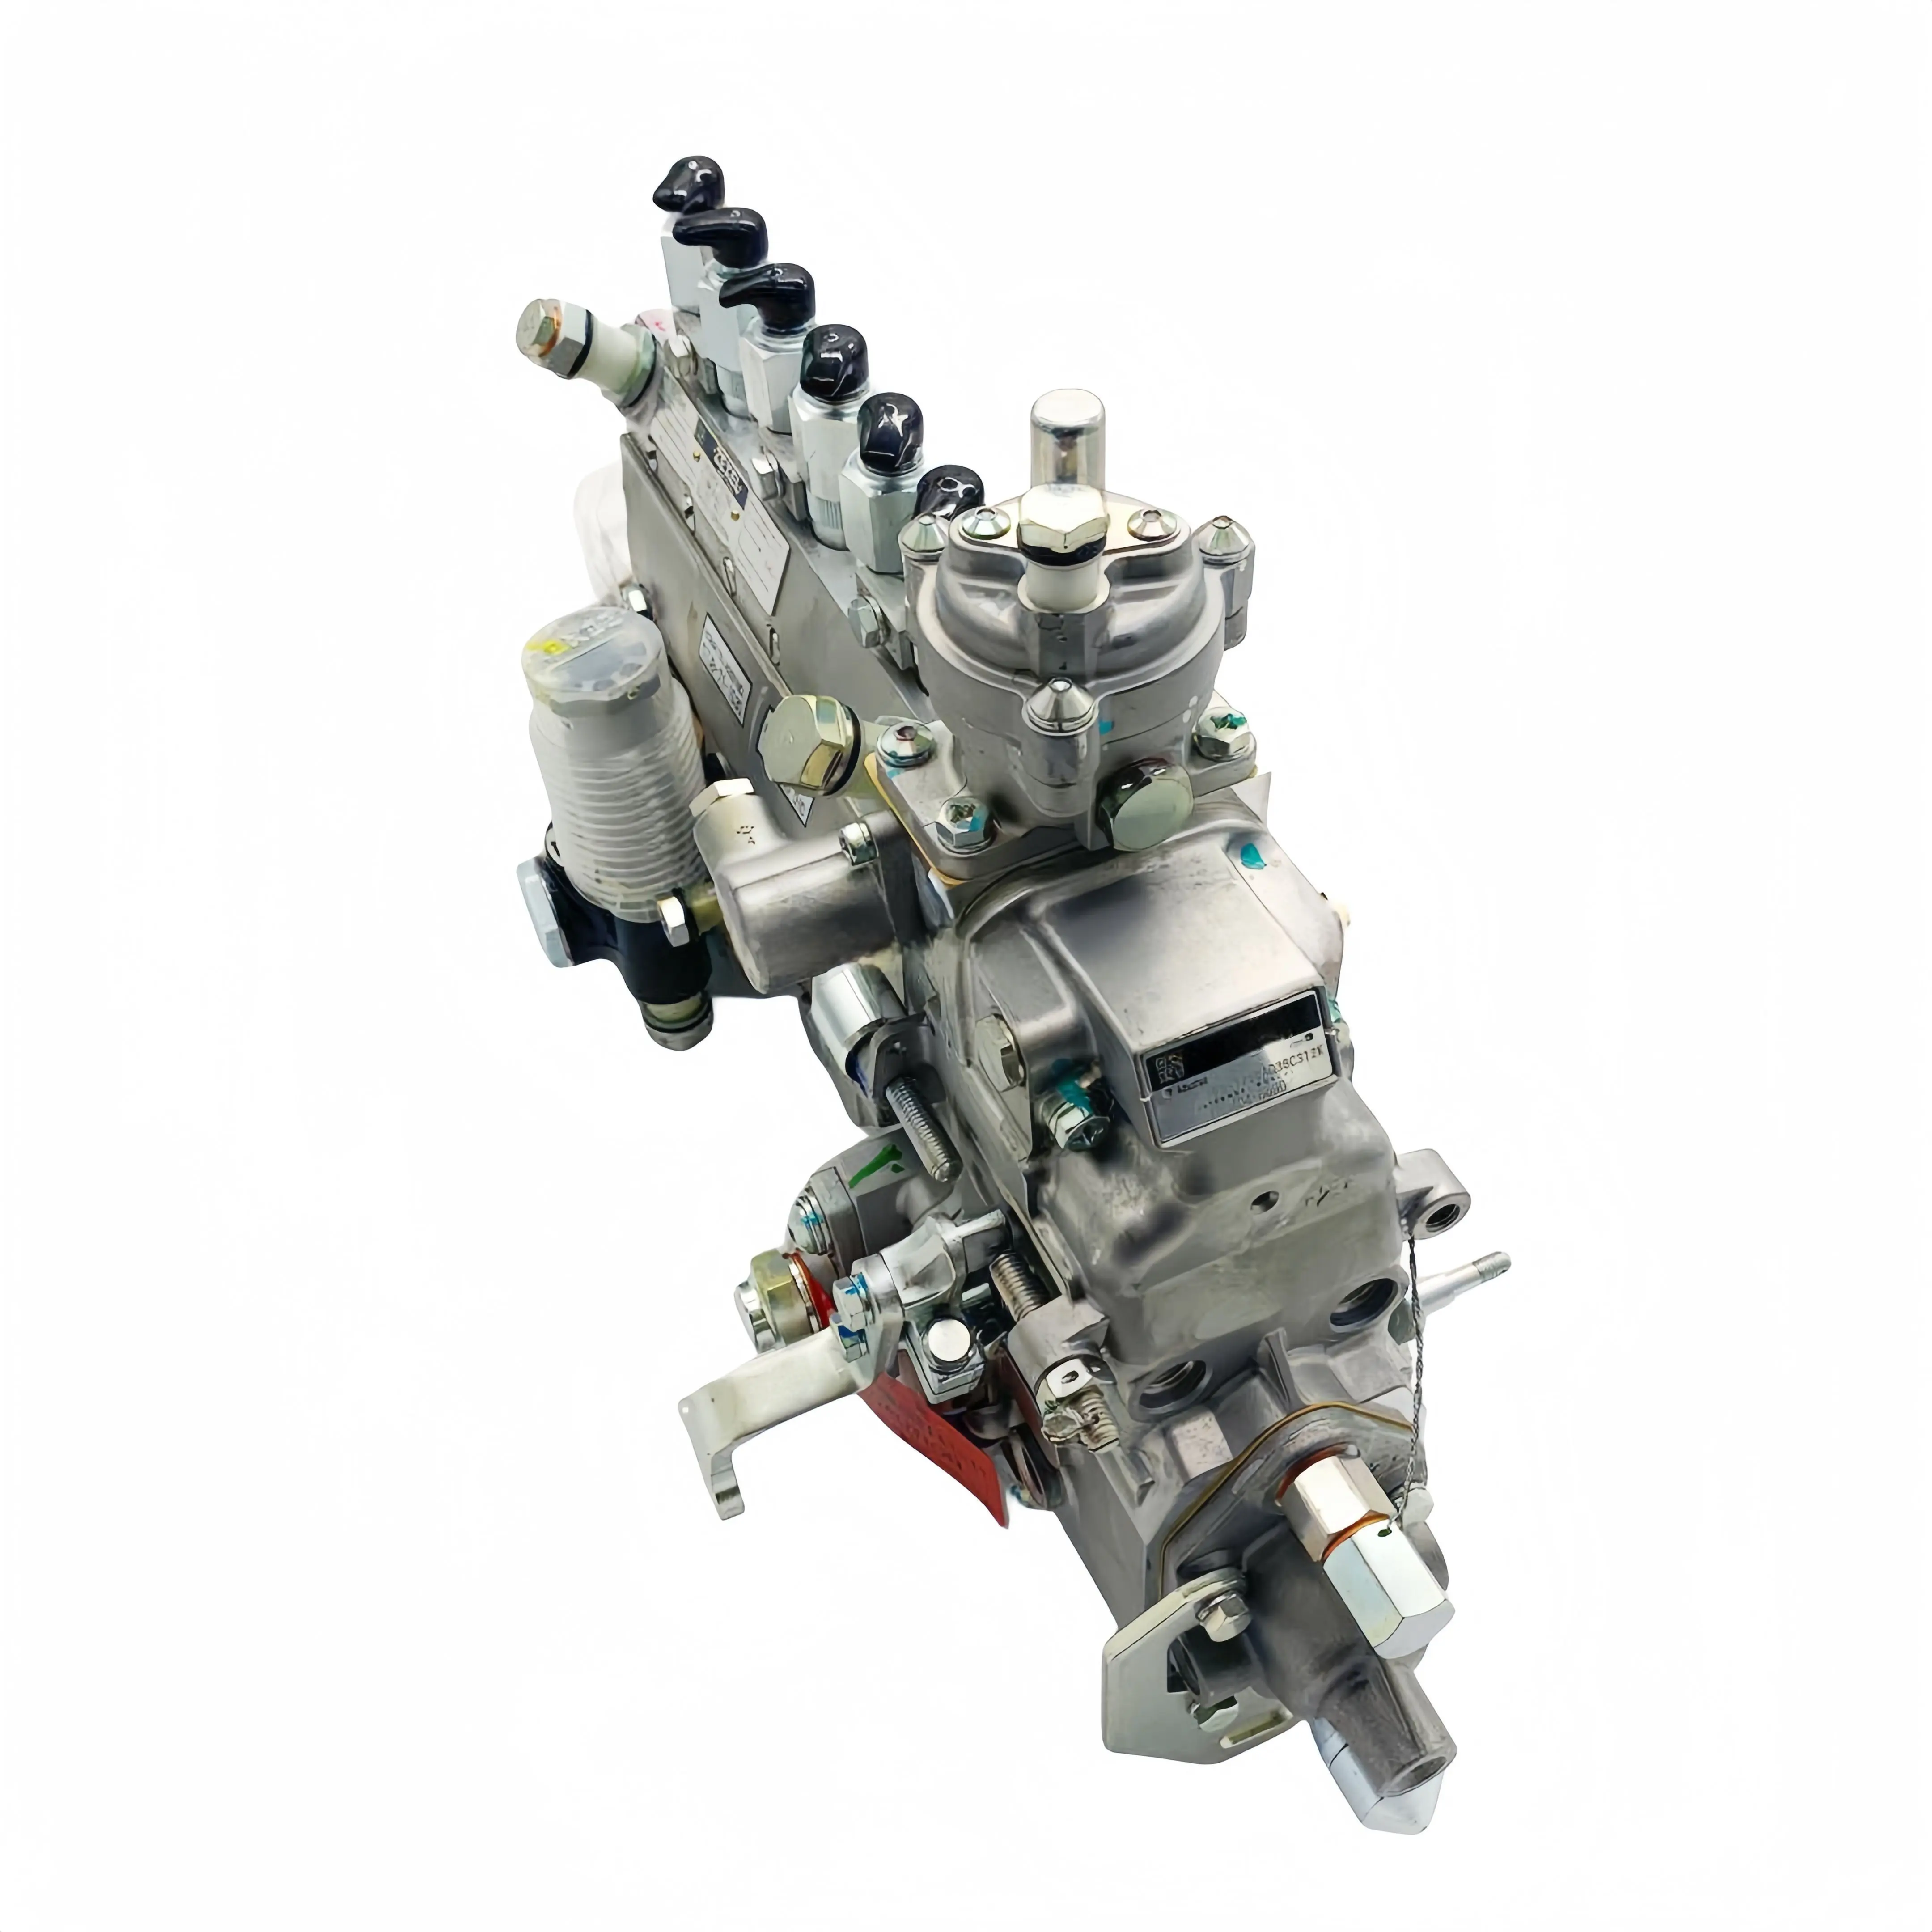 Fuel Injection Pump Engine Parts 1156033345 High Pressure Fuel Pump 6HK1 For Hitachi ZX330 Excavator